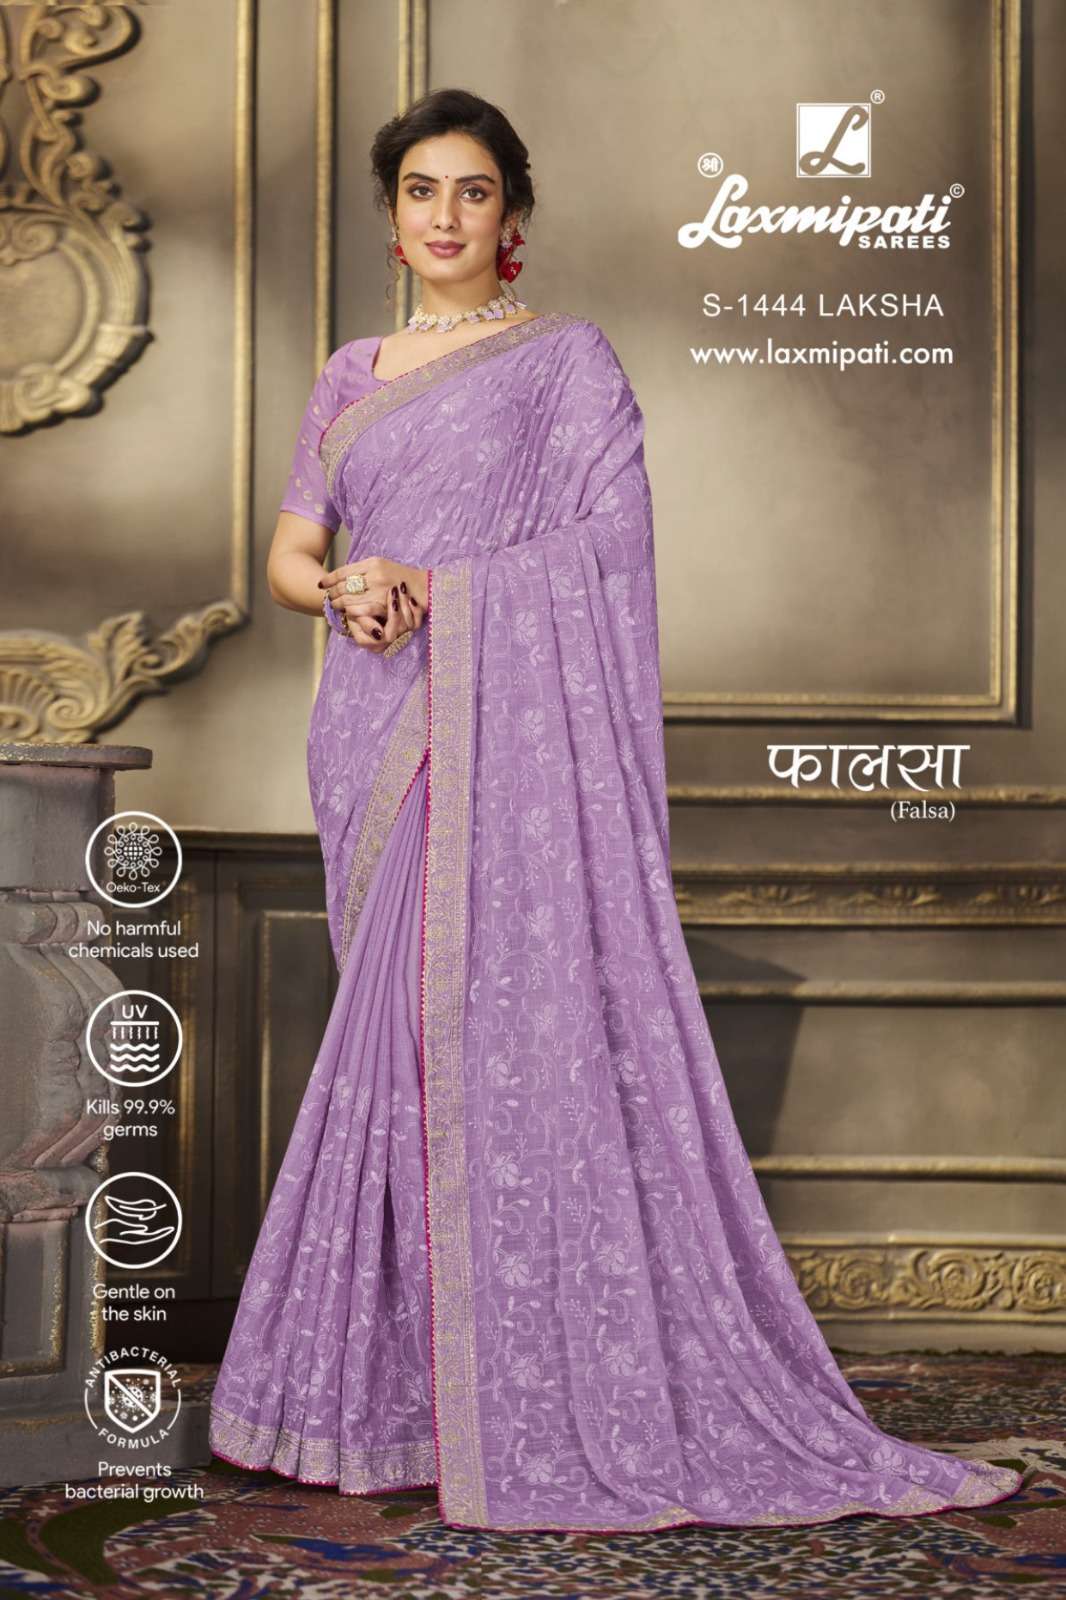 Buy Laxmipati sarees online